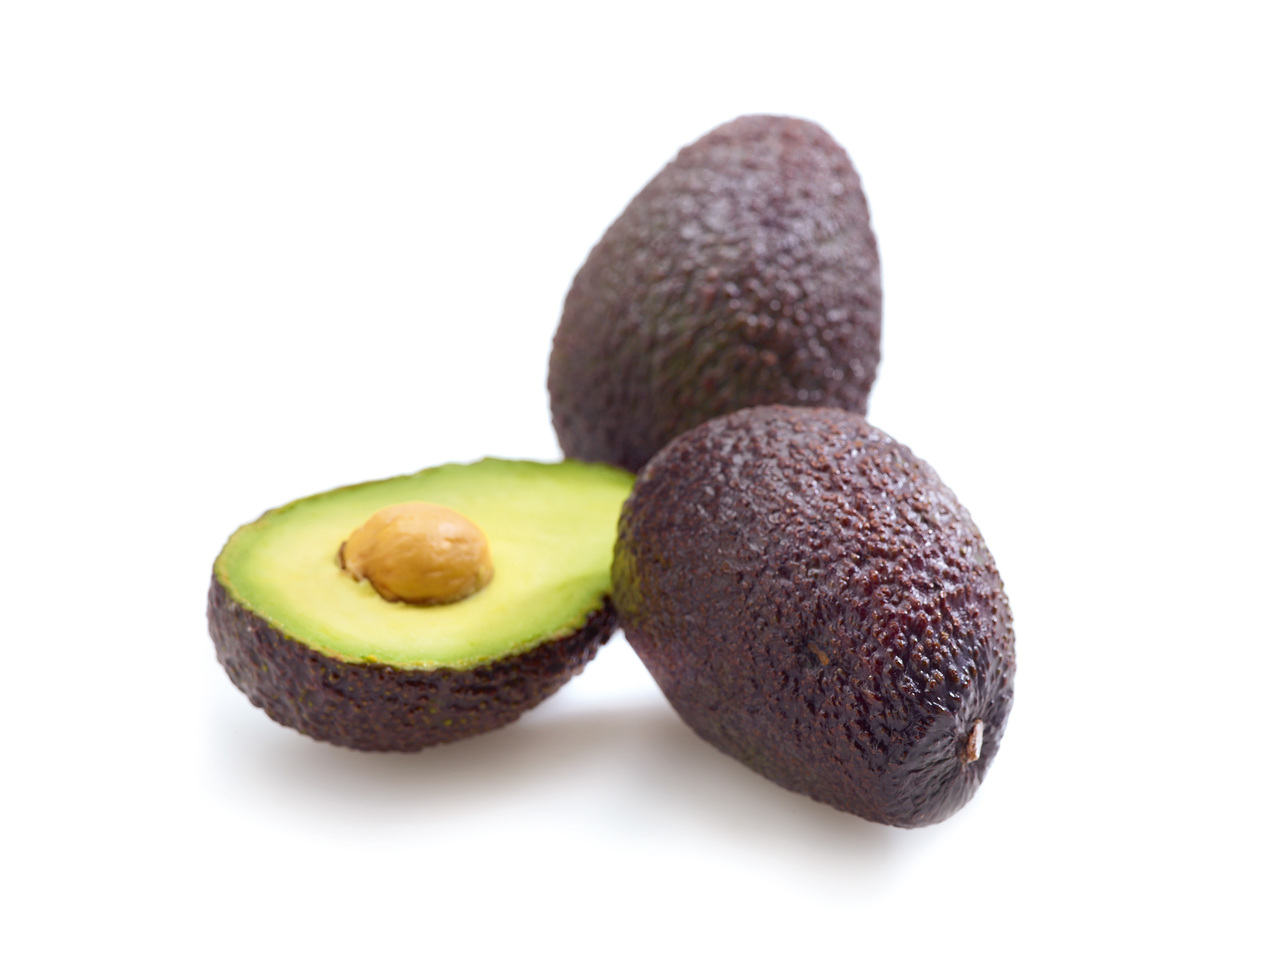 Baby-avocado's